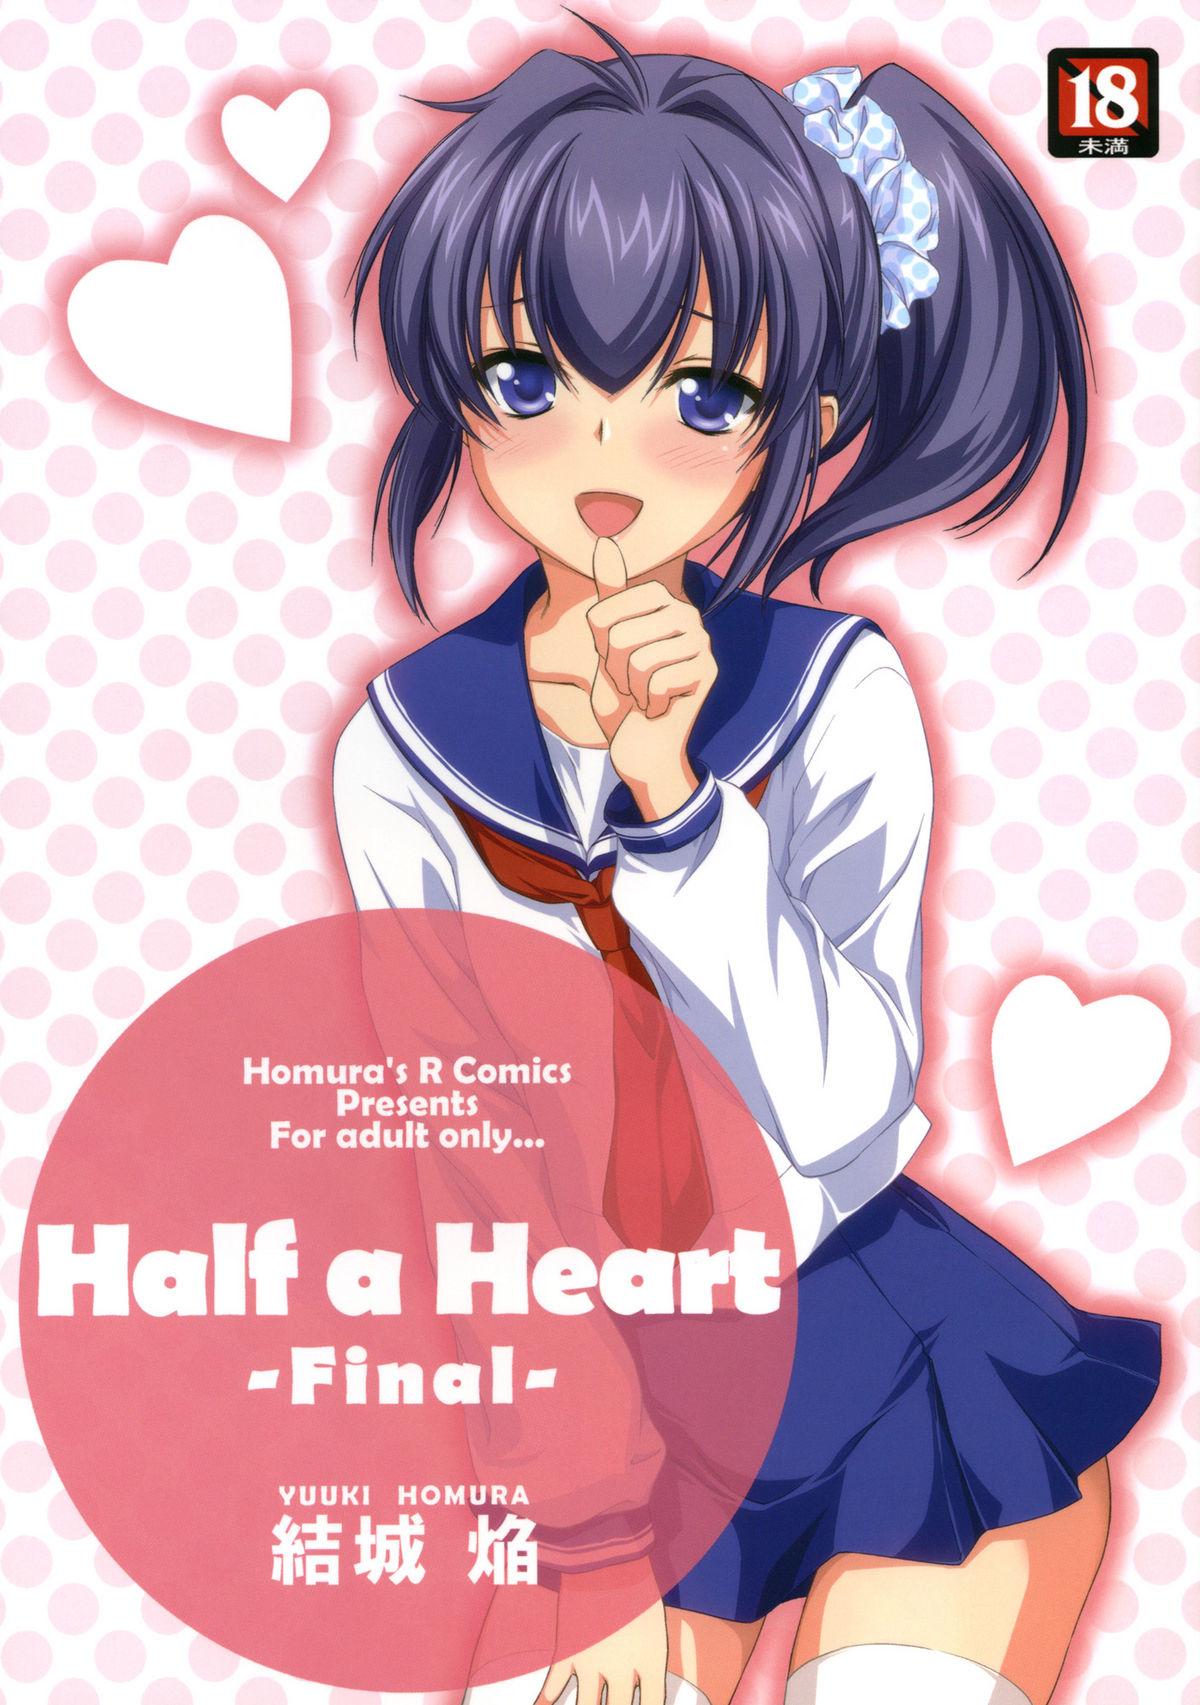 Half a Heart 0